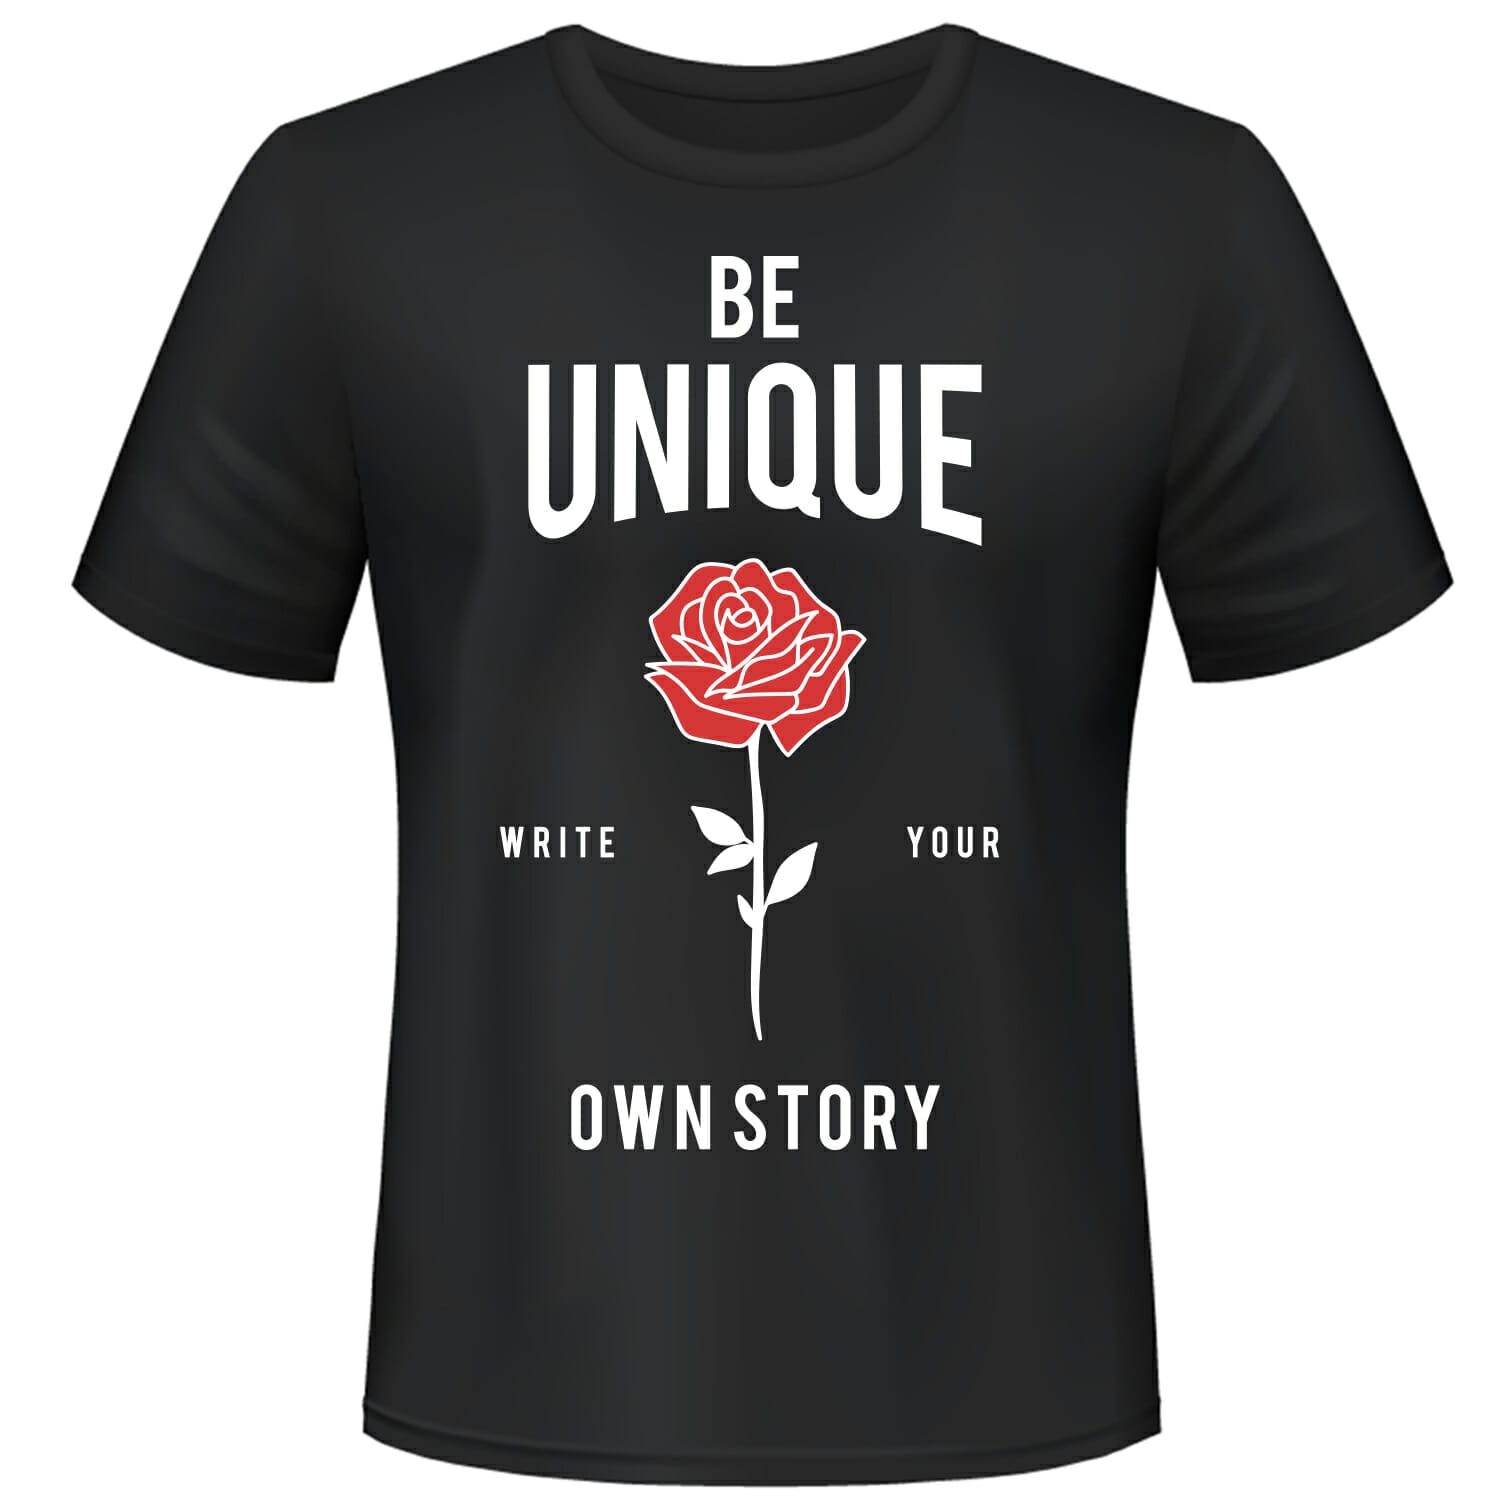 be unique tshirt design